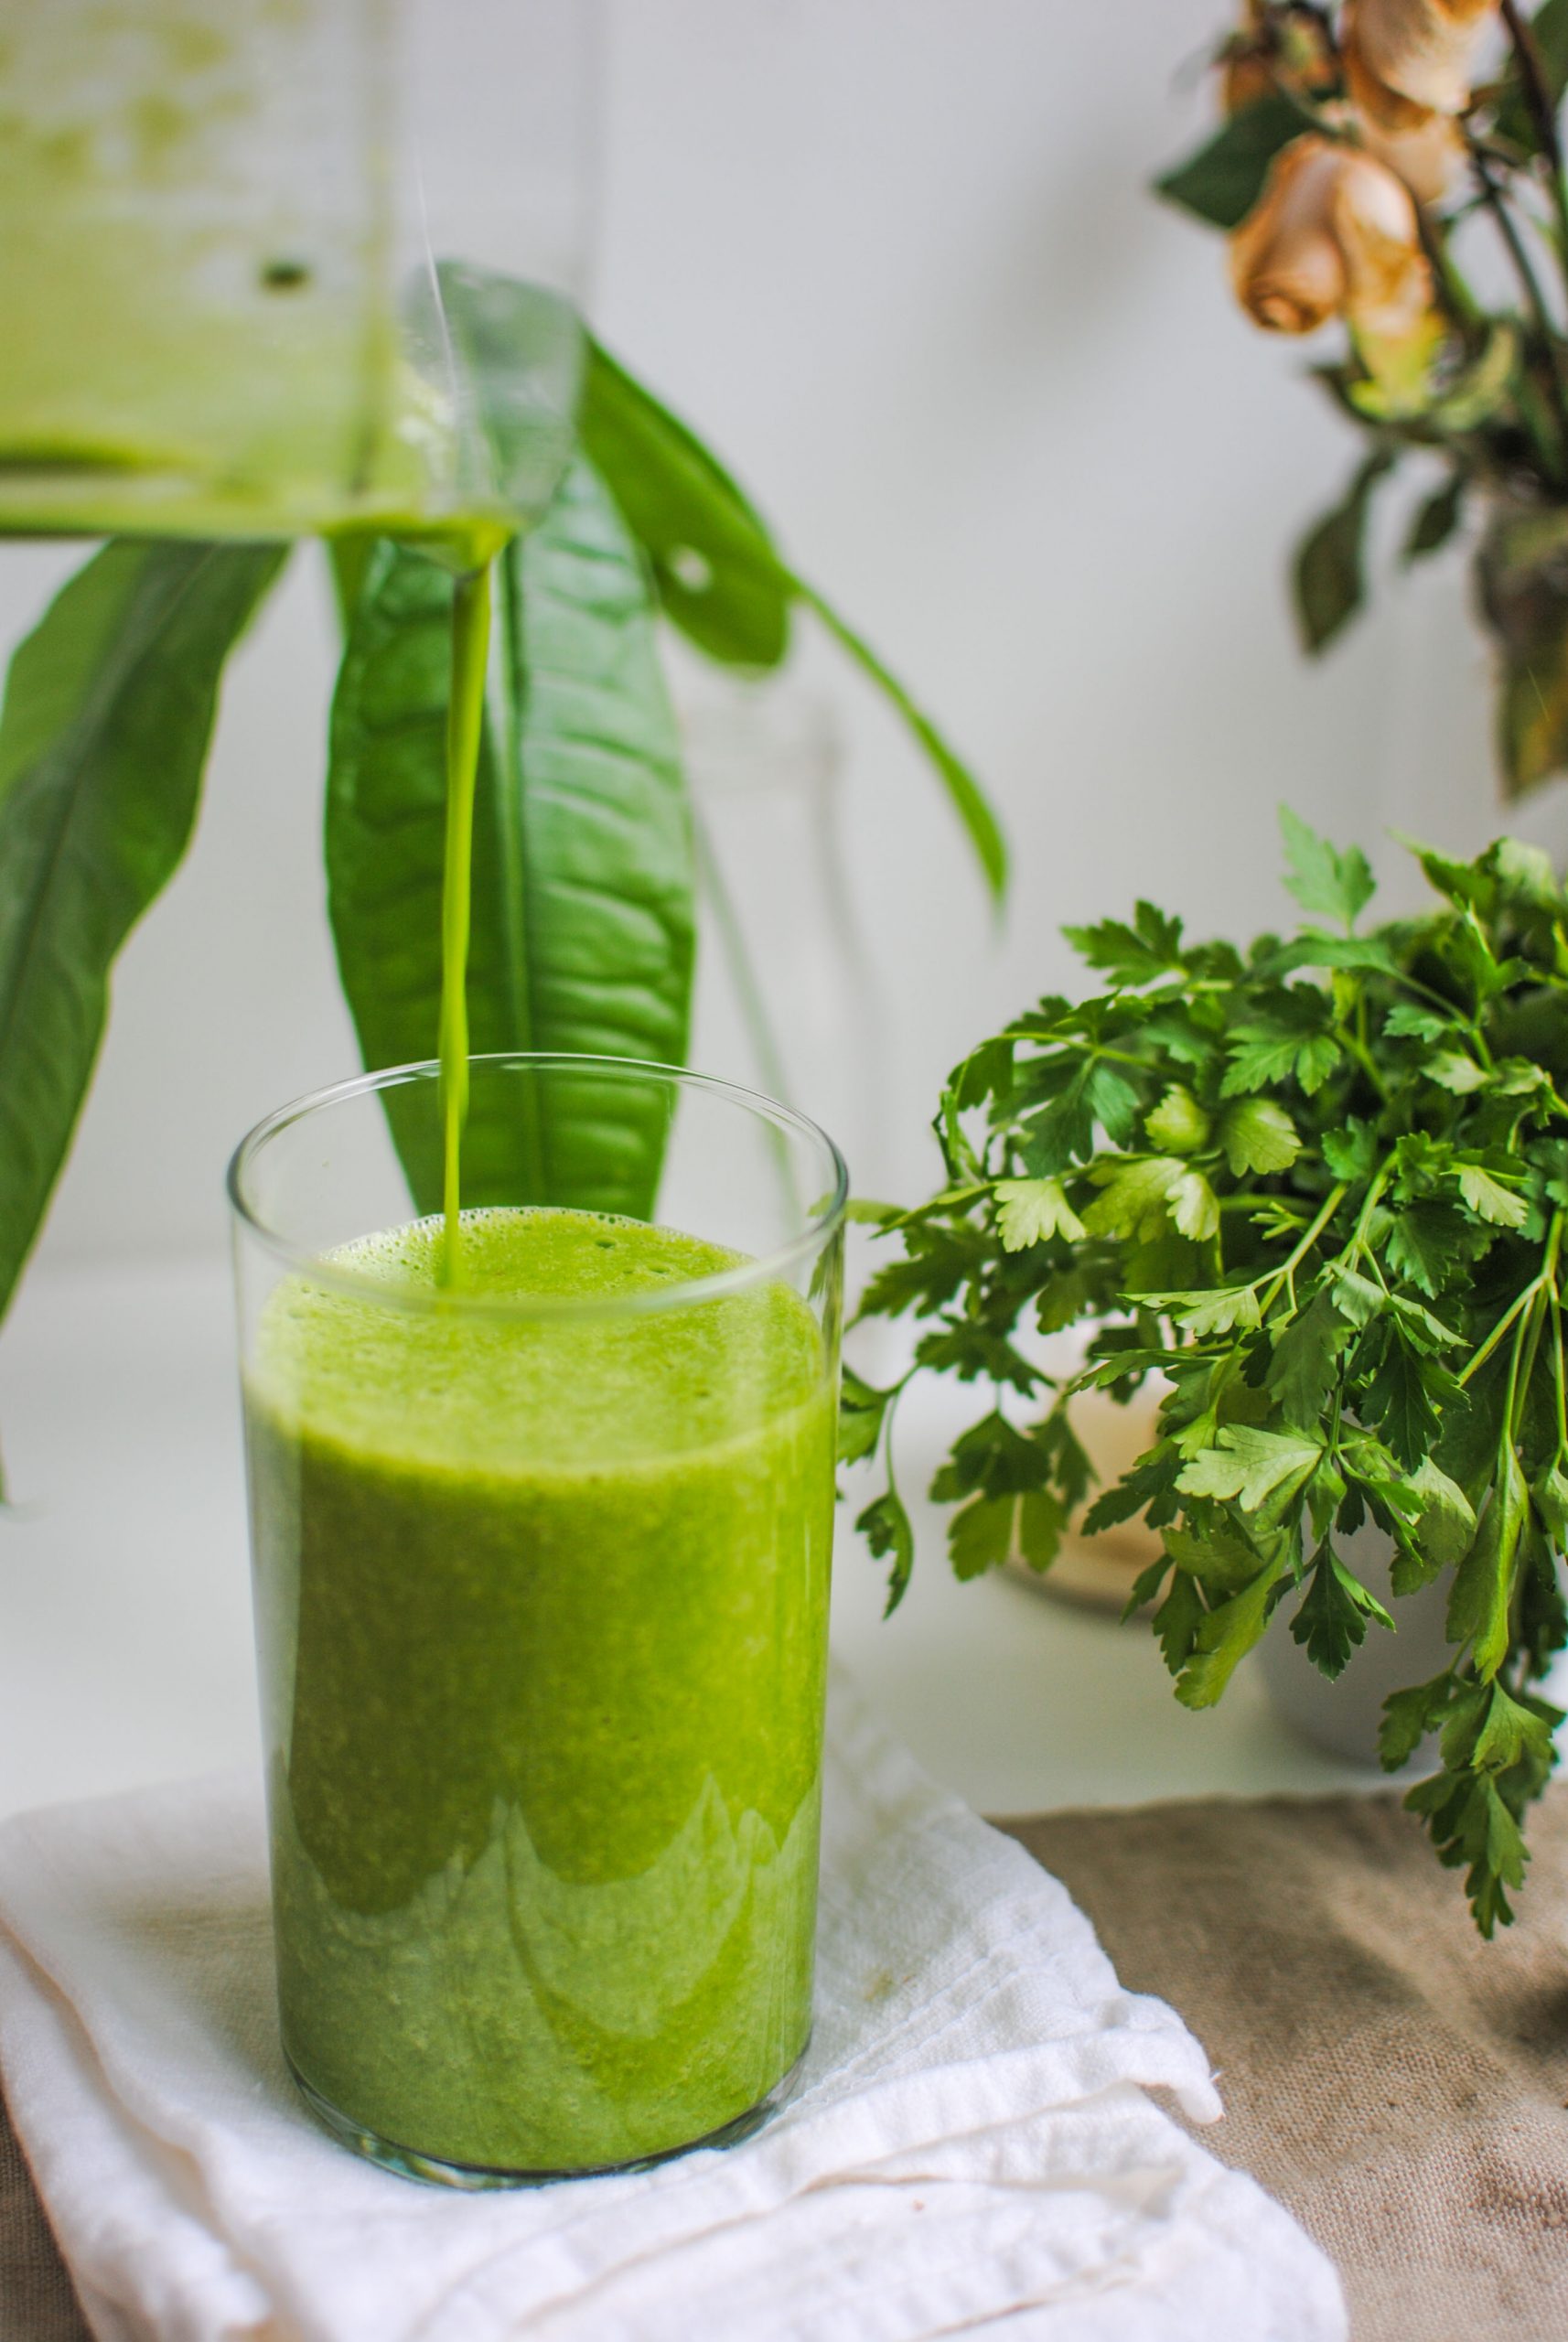 green smoothie basics | please consider | joana limao